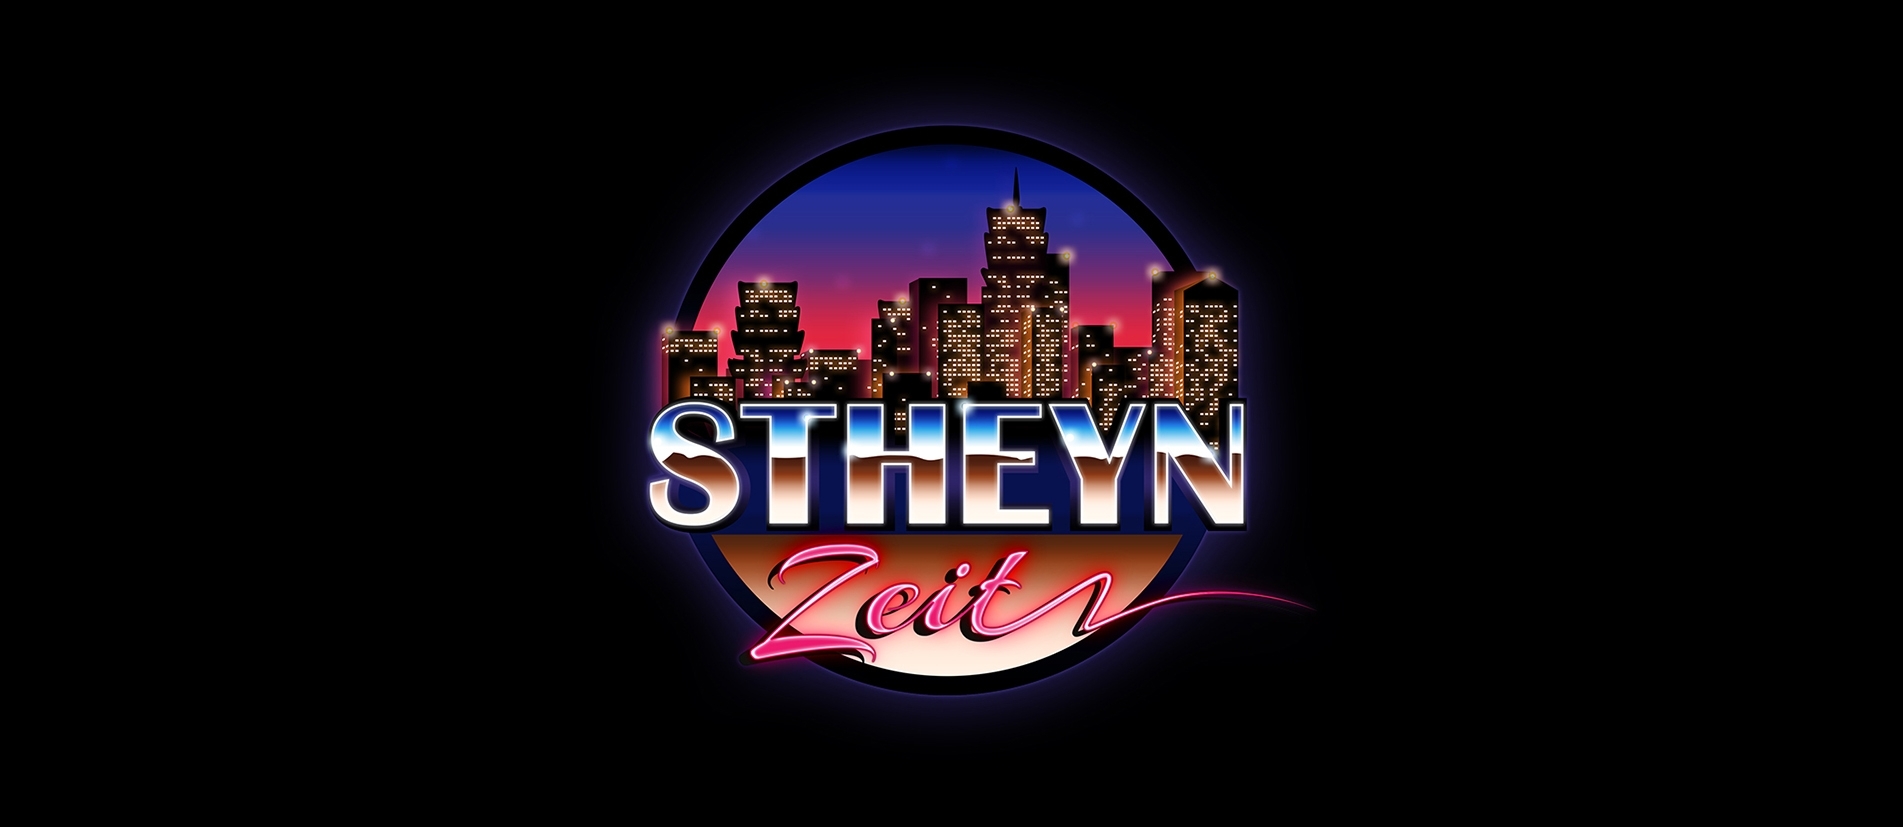 Stheyn Zeit Logo